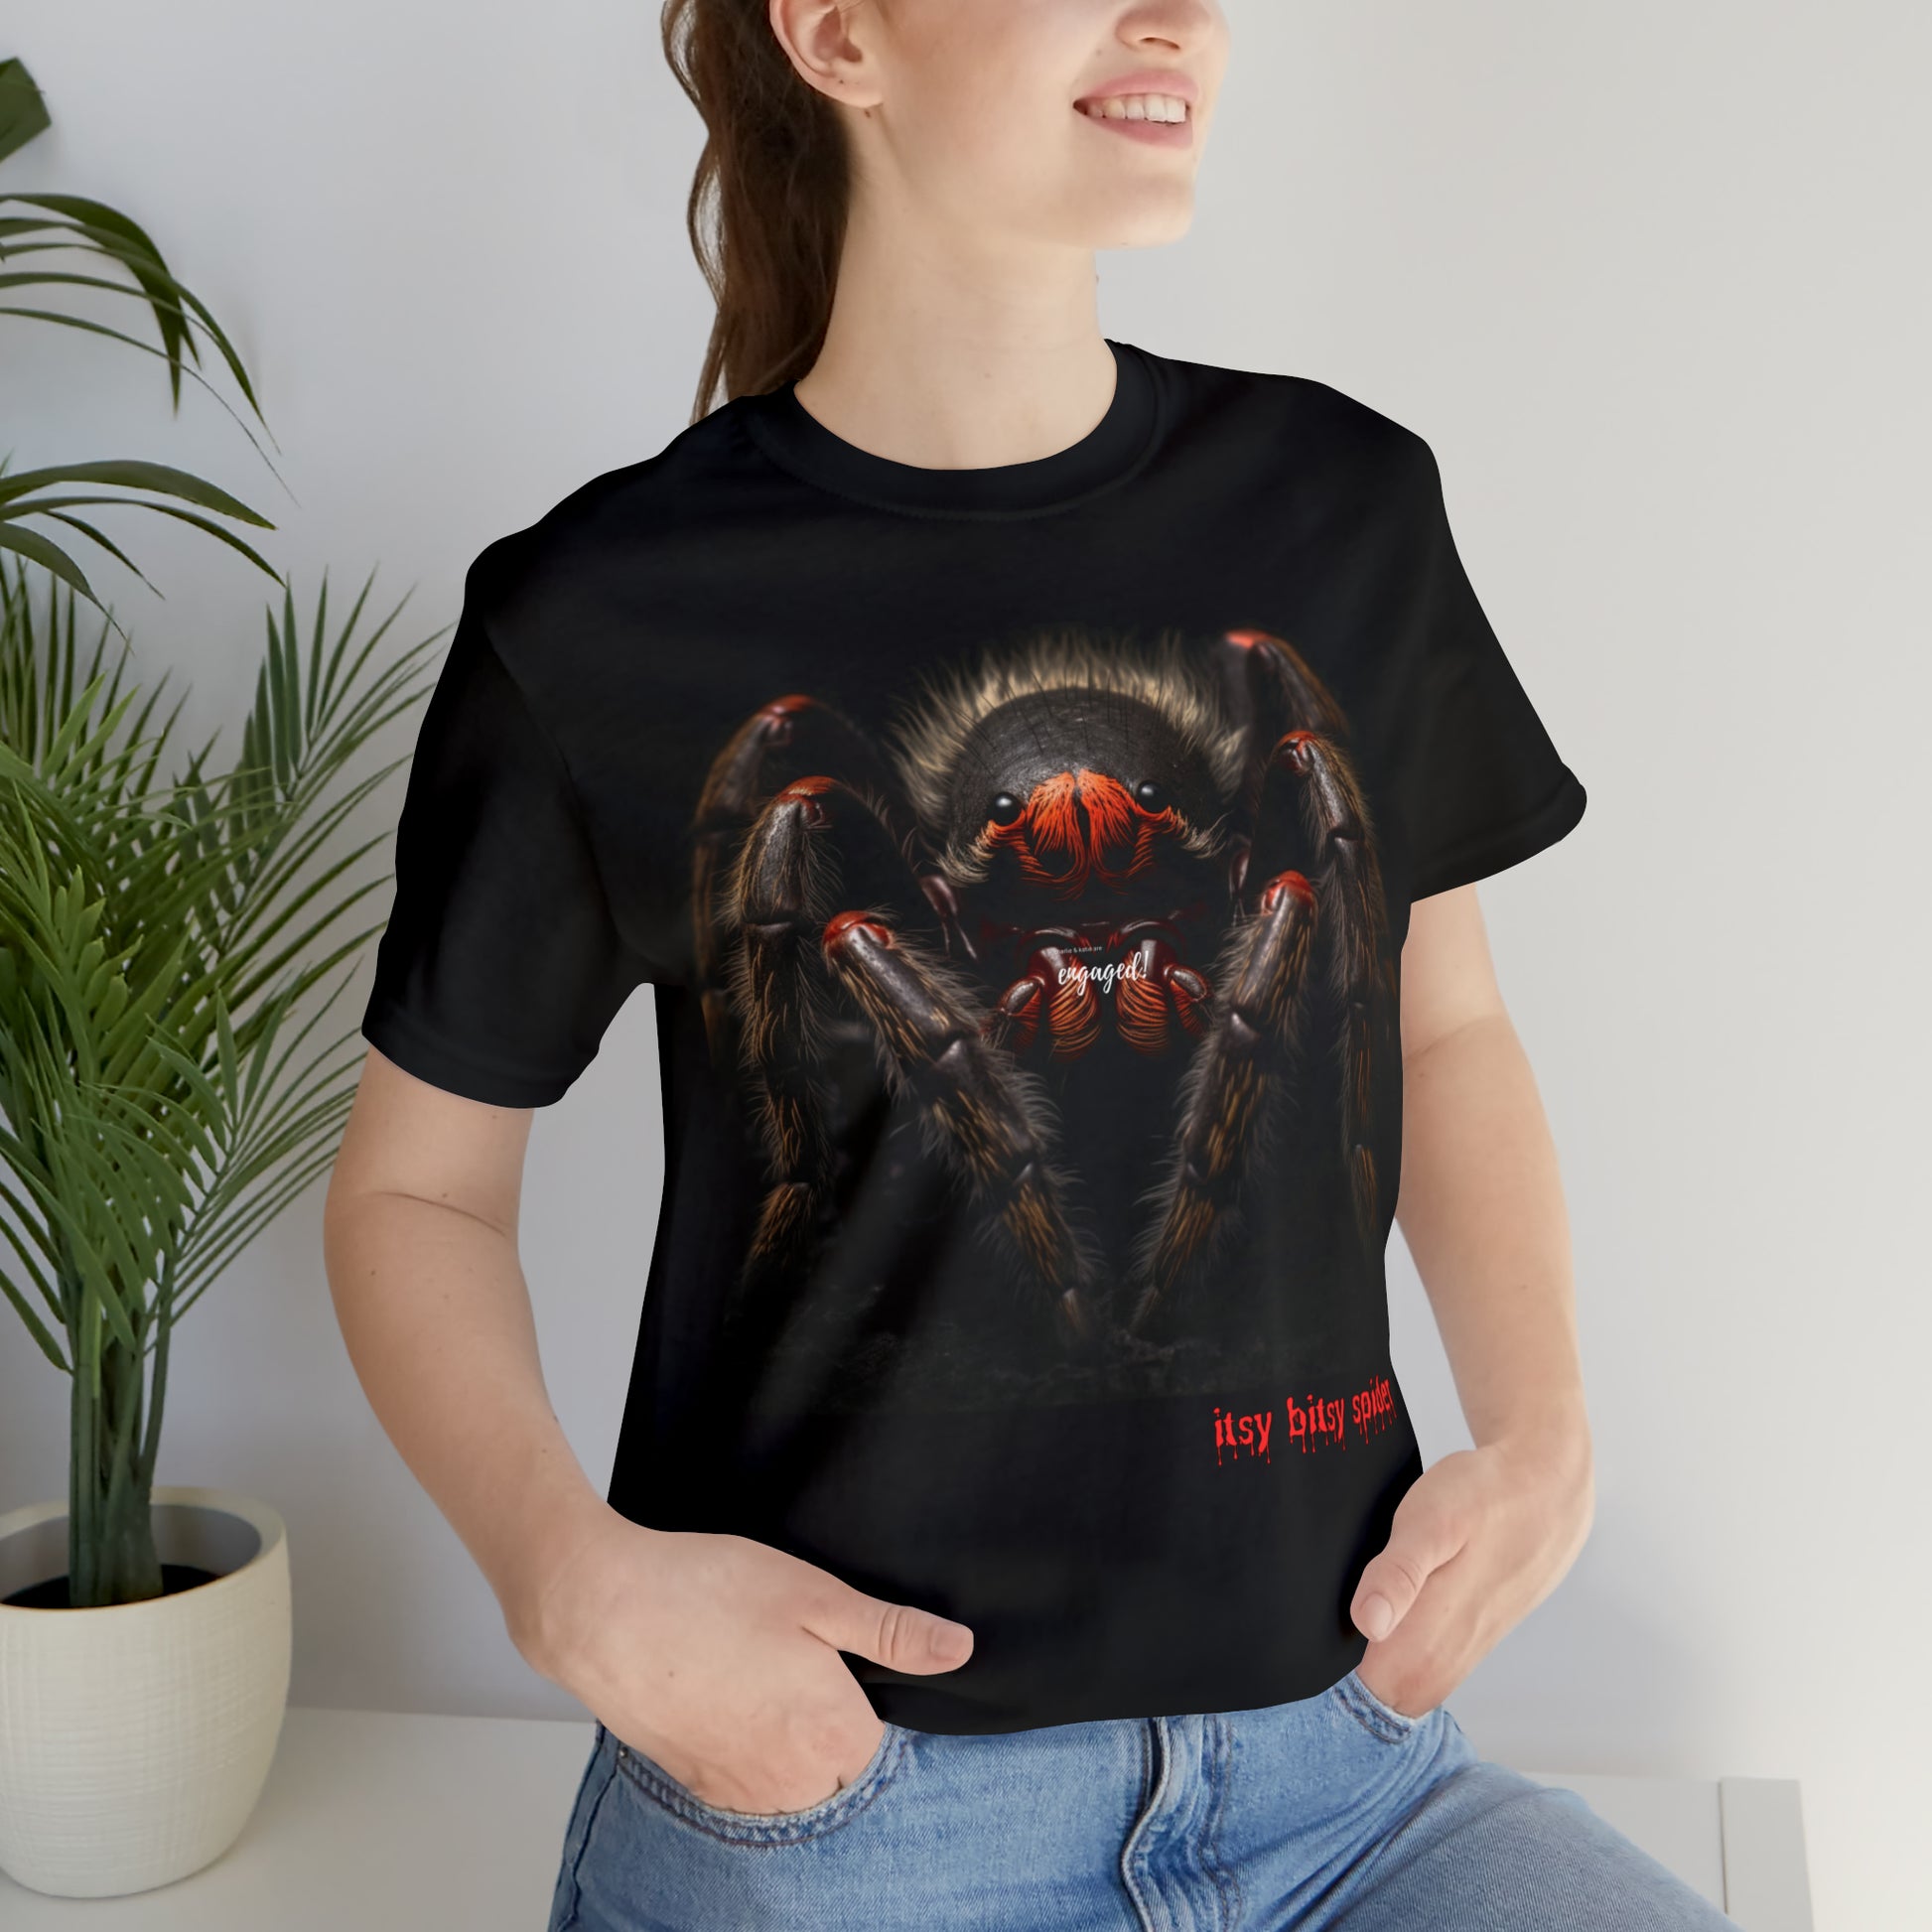 tarantula t-shirt on woman, front view